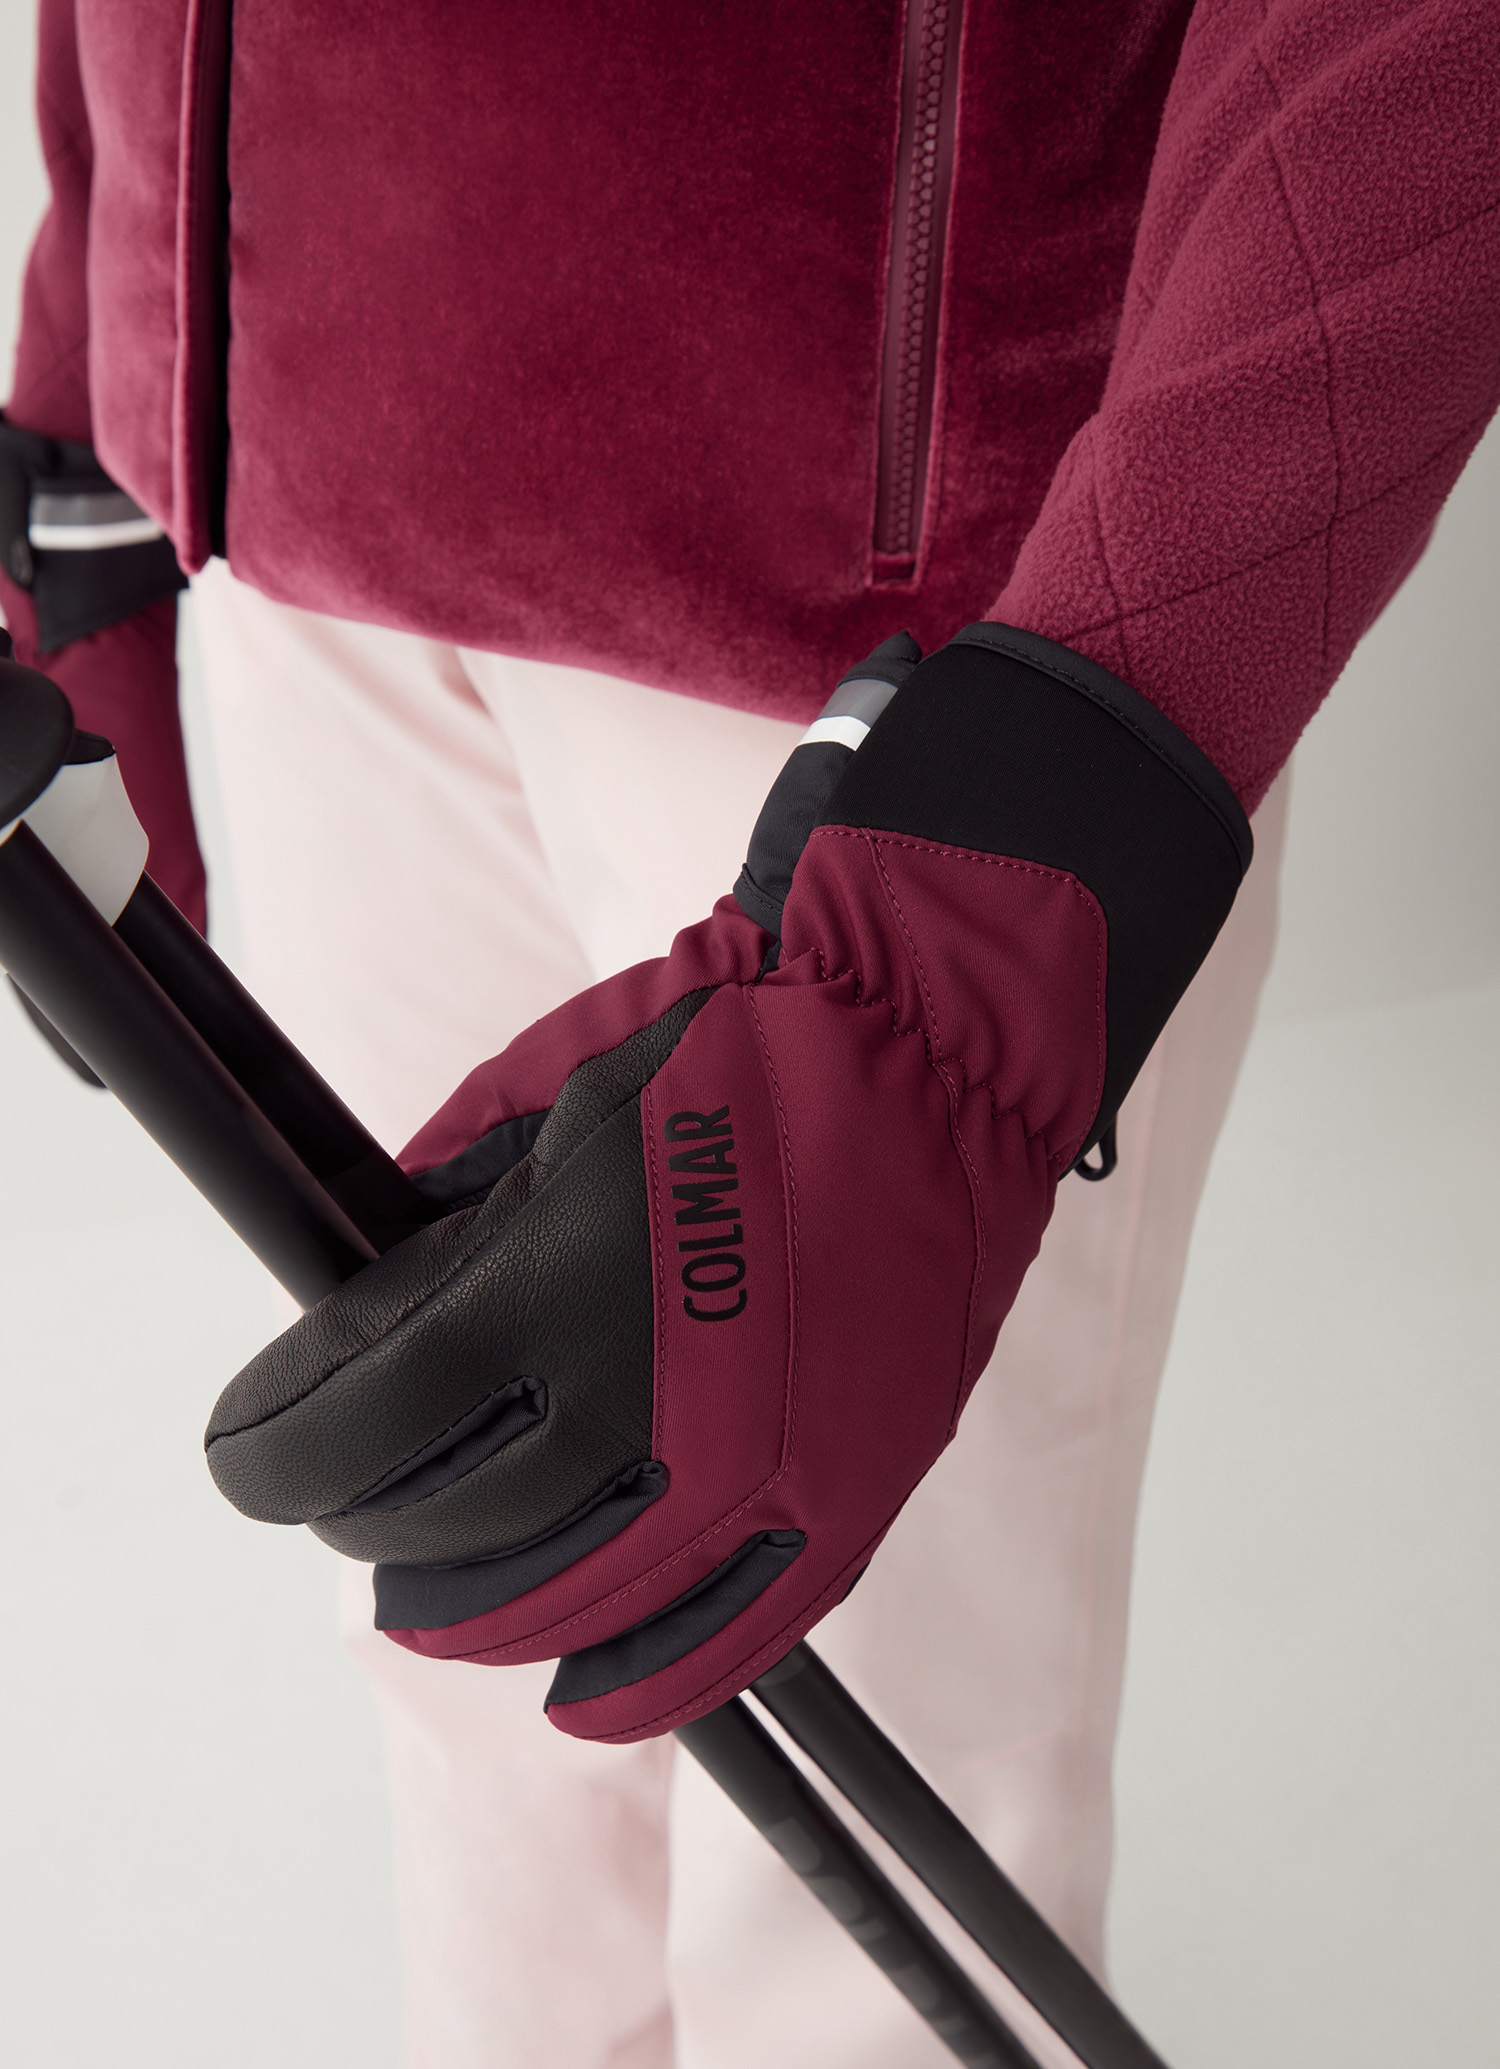 Gants ski femme thermiques tactiles imperméables - Opti Ski